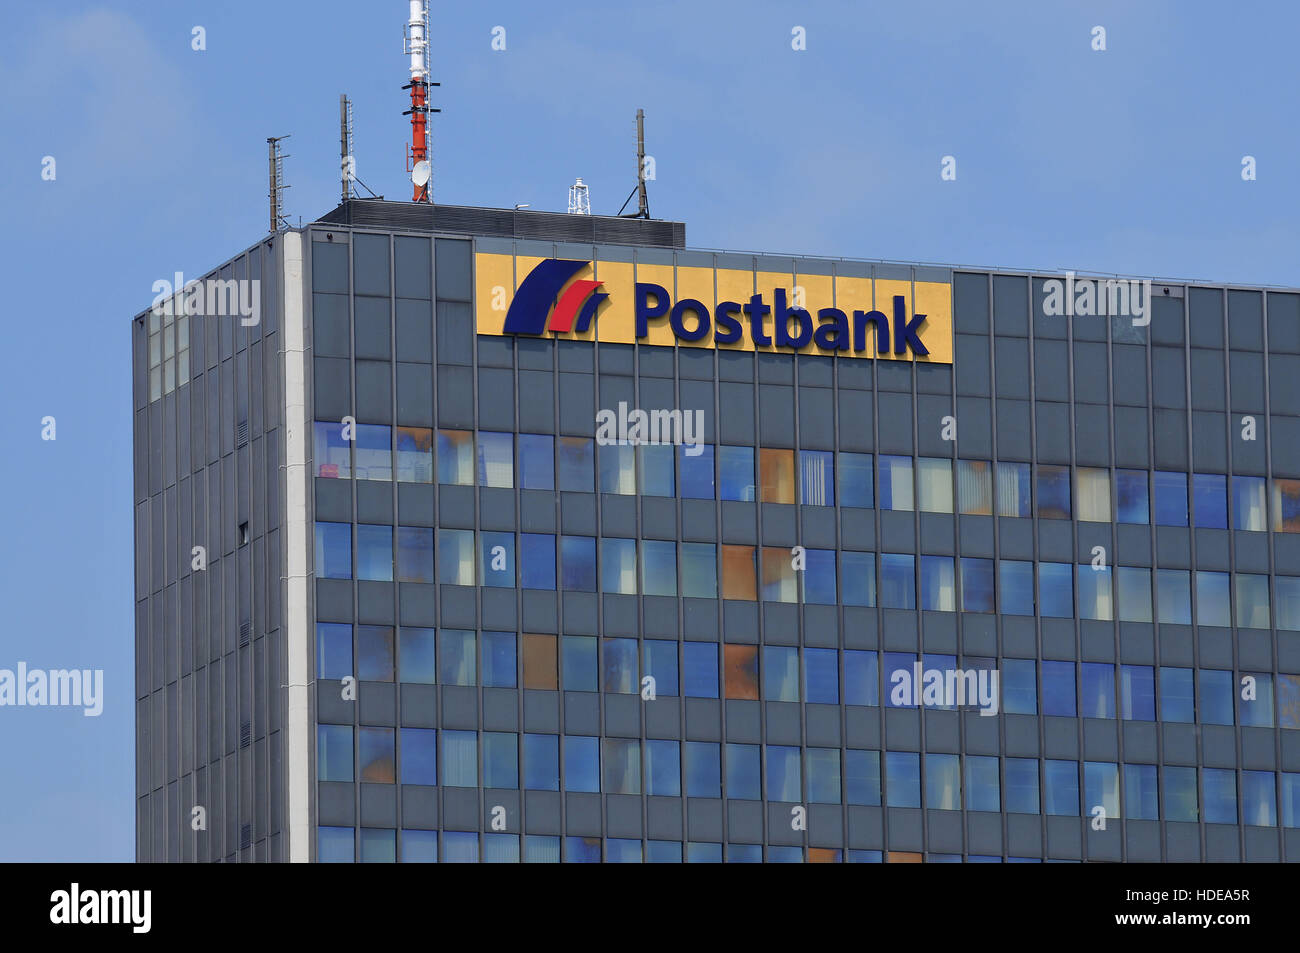 Postbank Hochhaus, Hallesches Ufer, Kreuzberg, Berlin, Deutschland Stock Photo